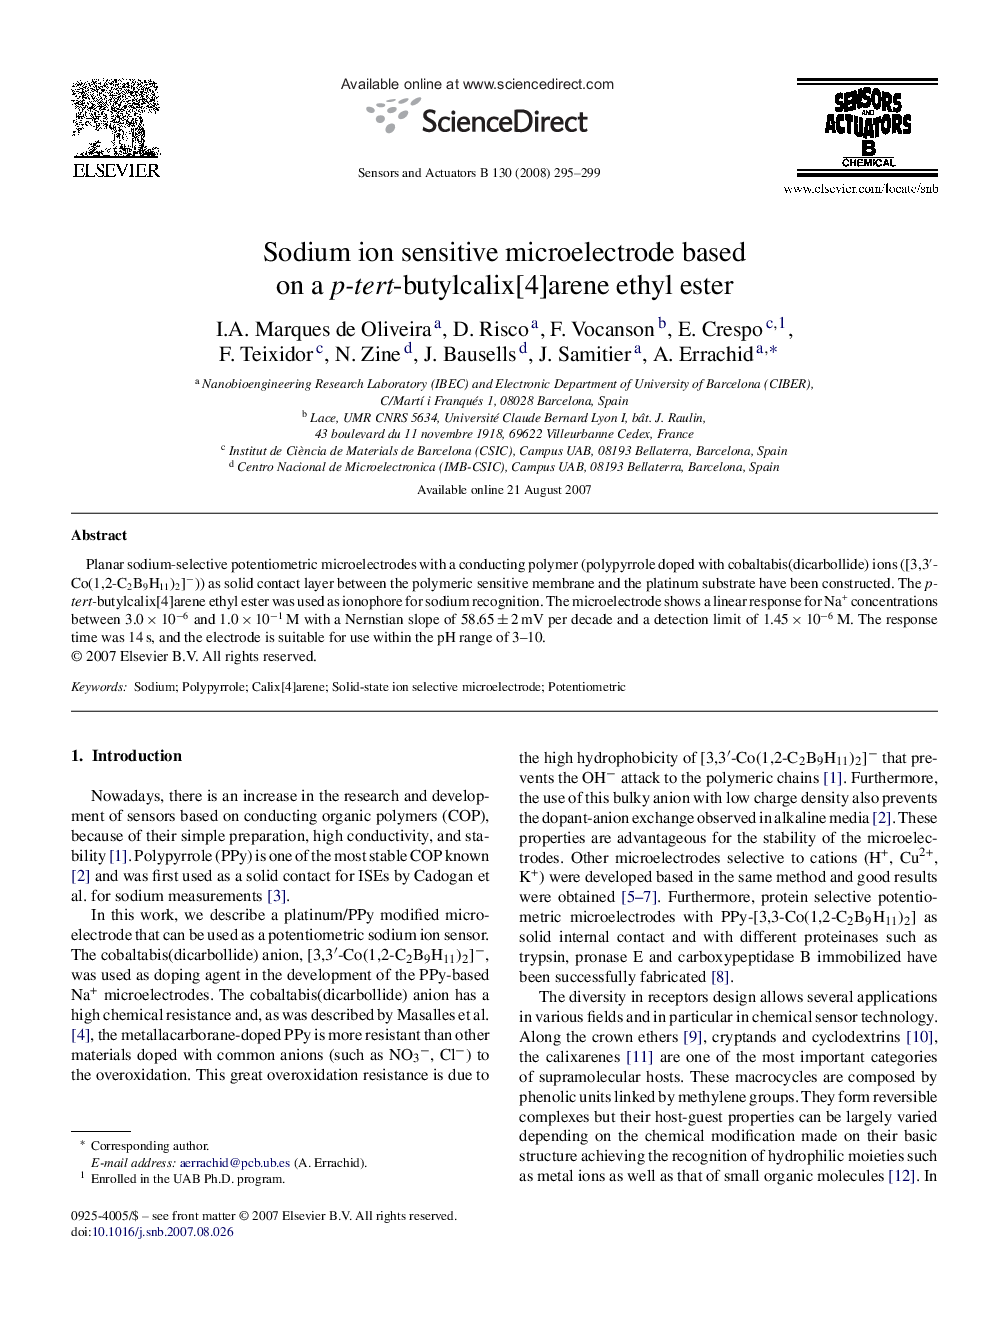 Sodium ion sensitive microelectrode based on a p-tert-butylcalix[4]arene ethyl ester